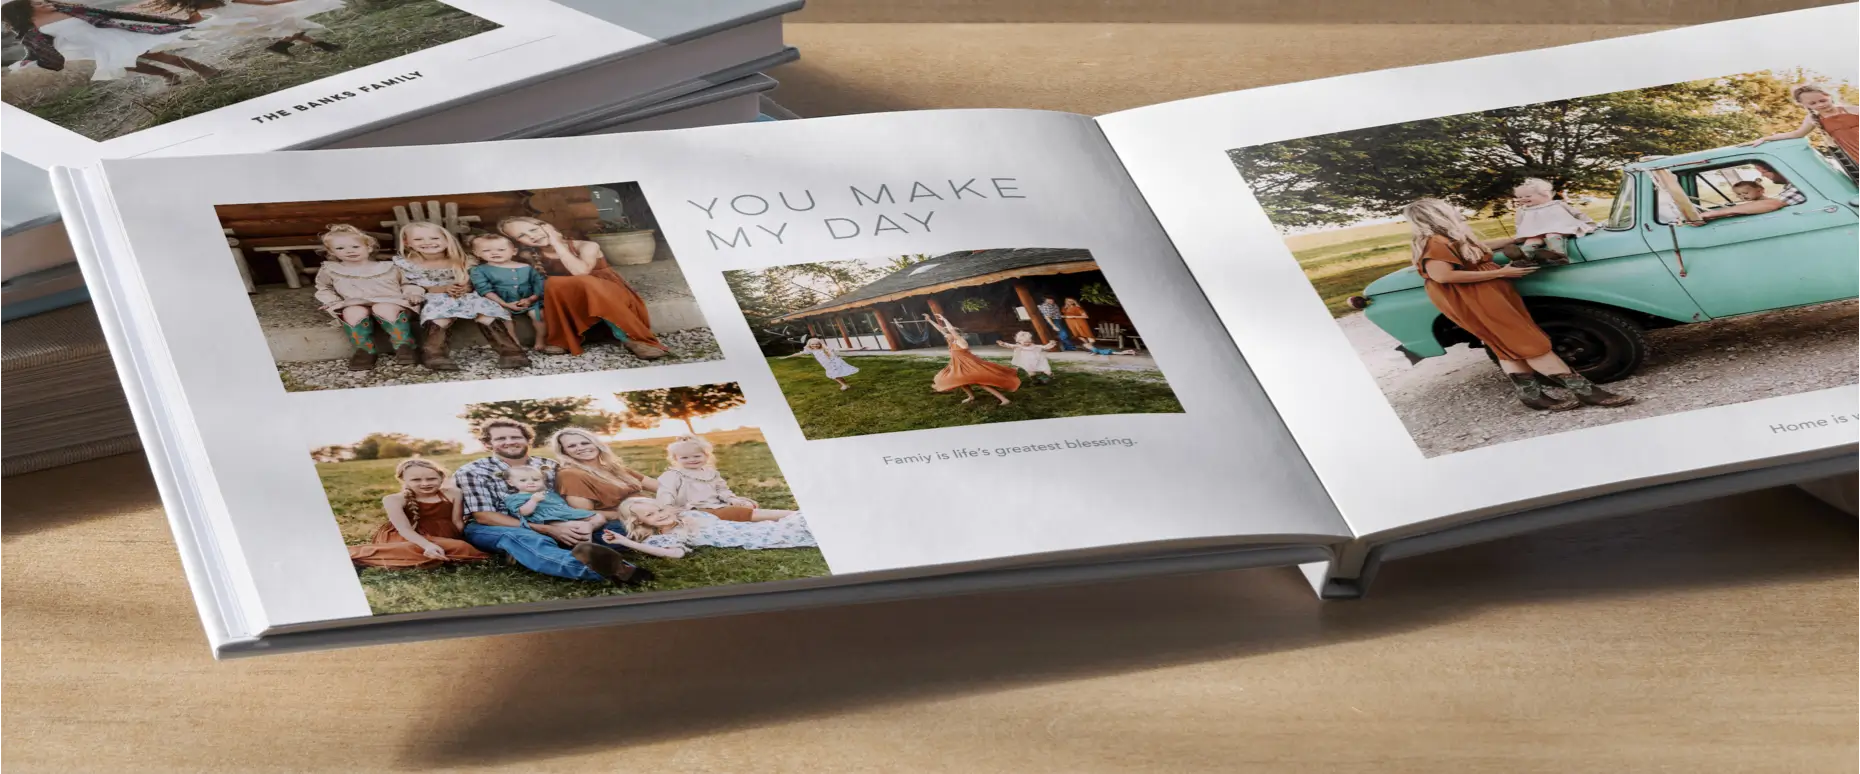 Create Custom Photo Books & Albums | Shutterfly